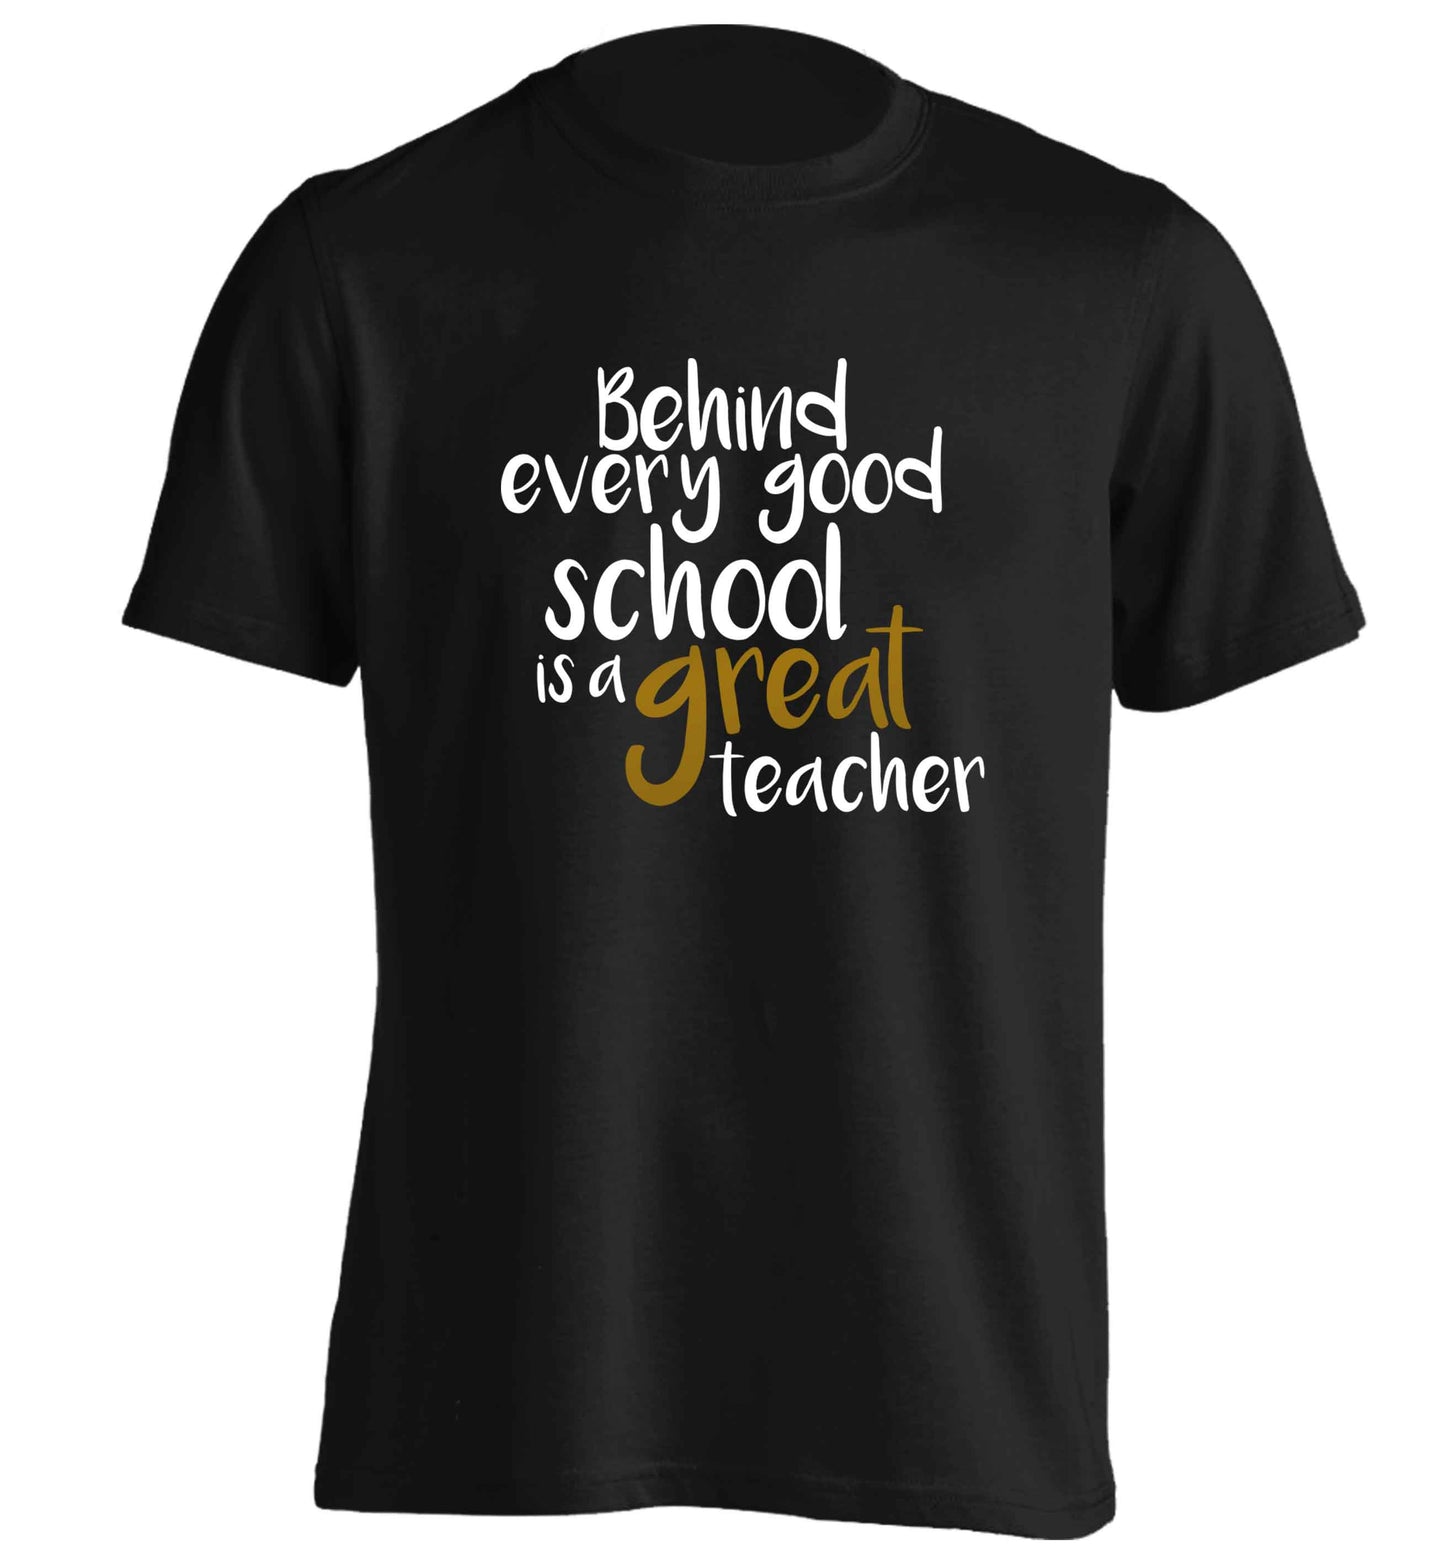 Behind every good school is a great teacher adults unisex black Tshirt 2XL